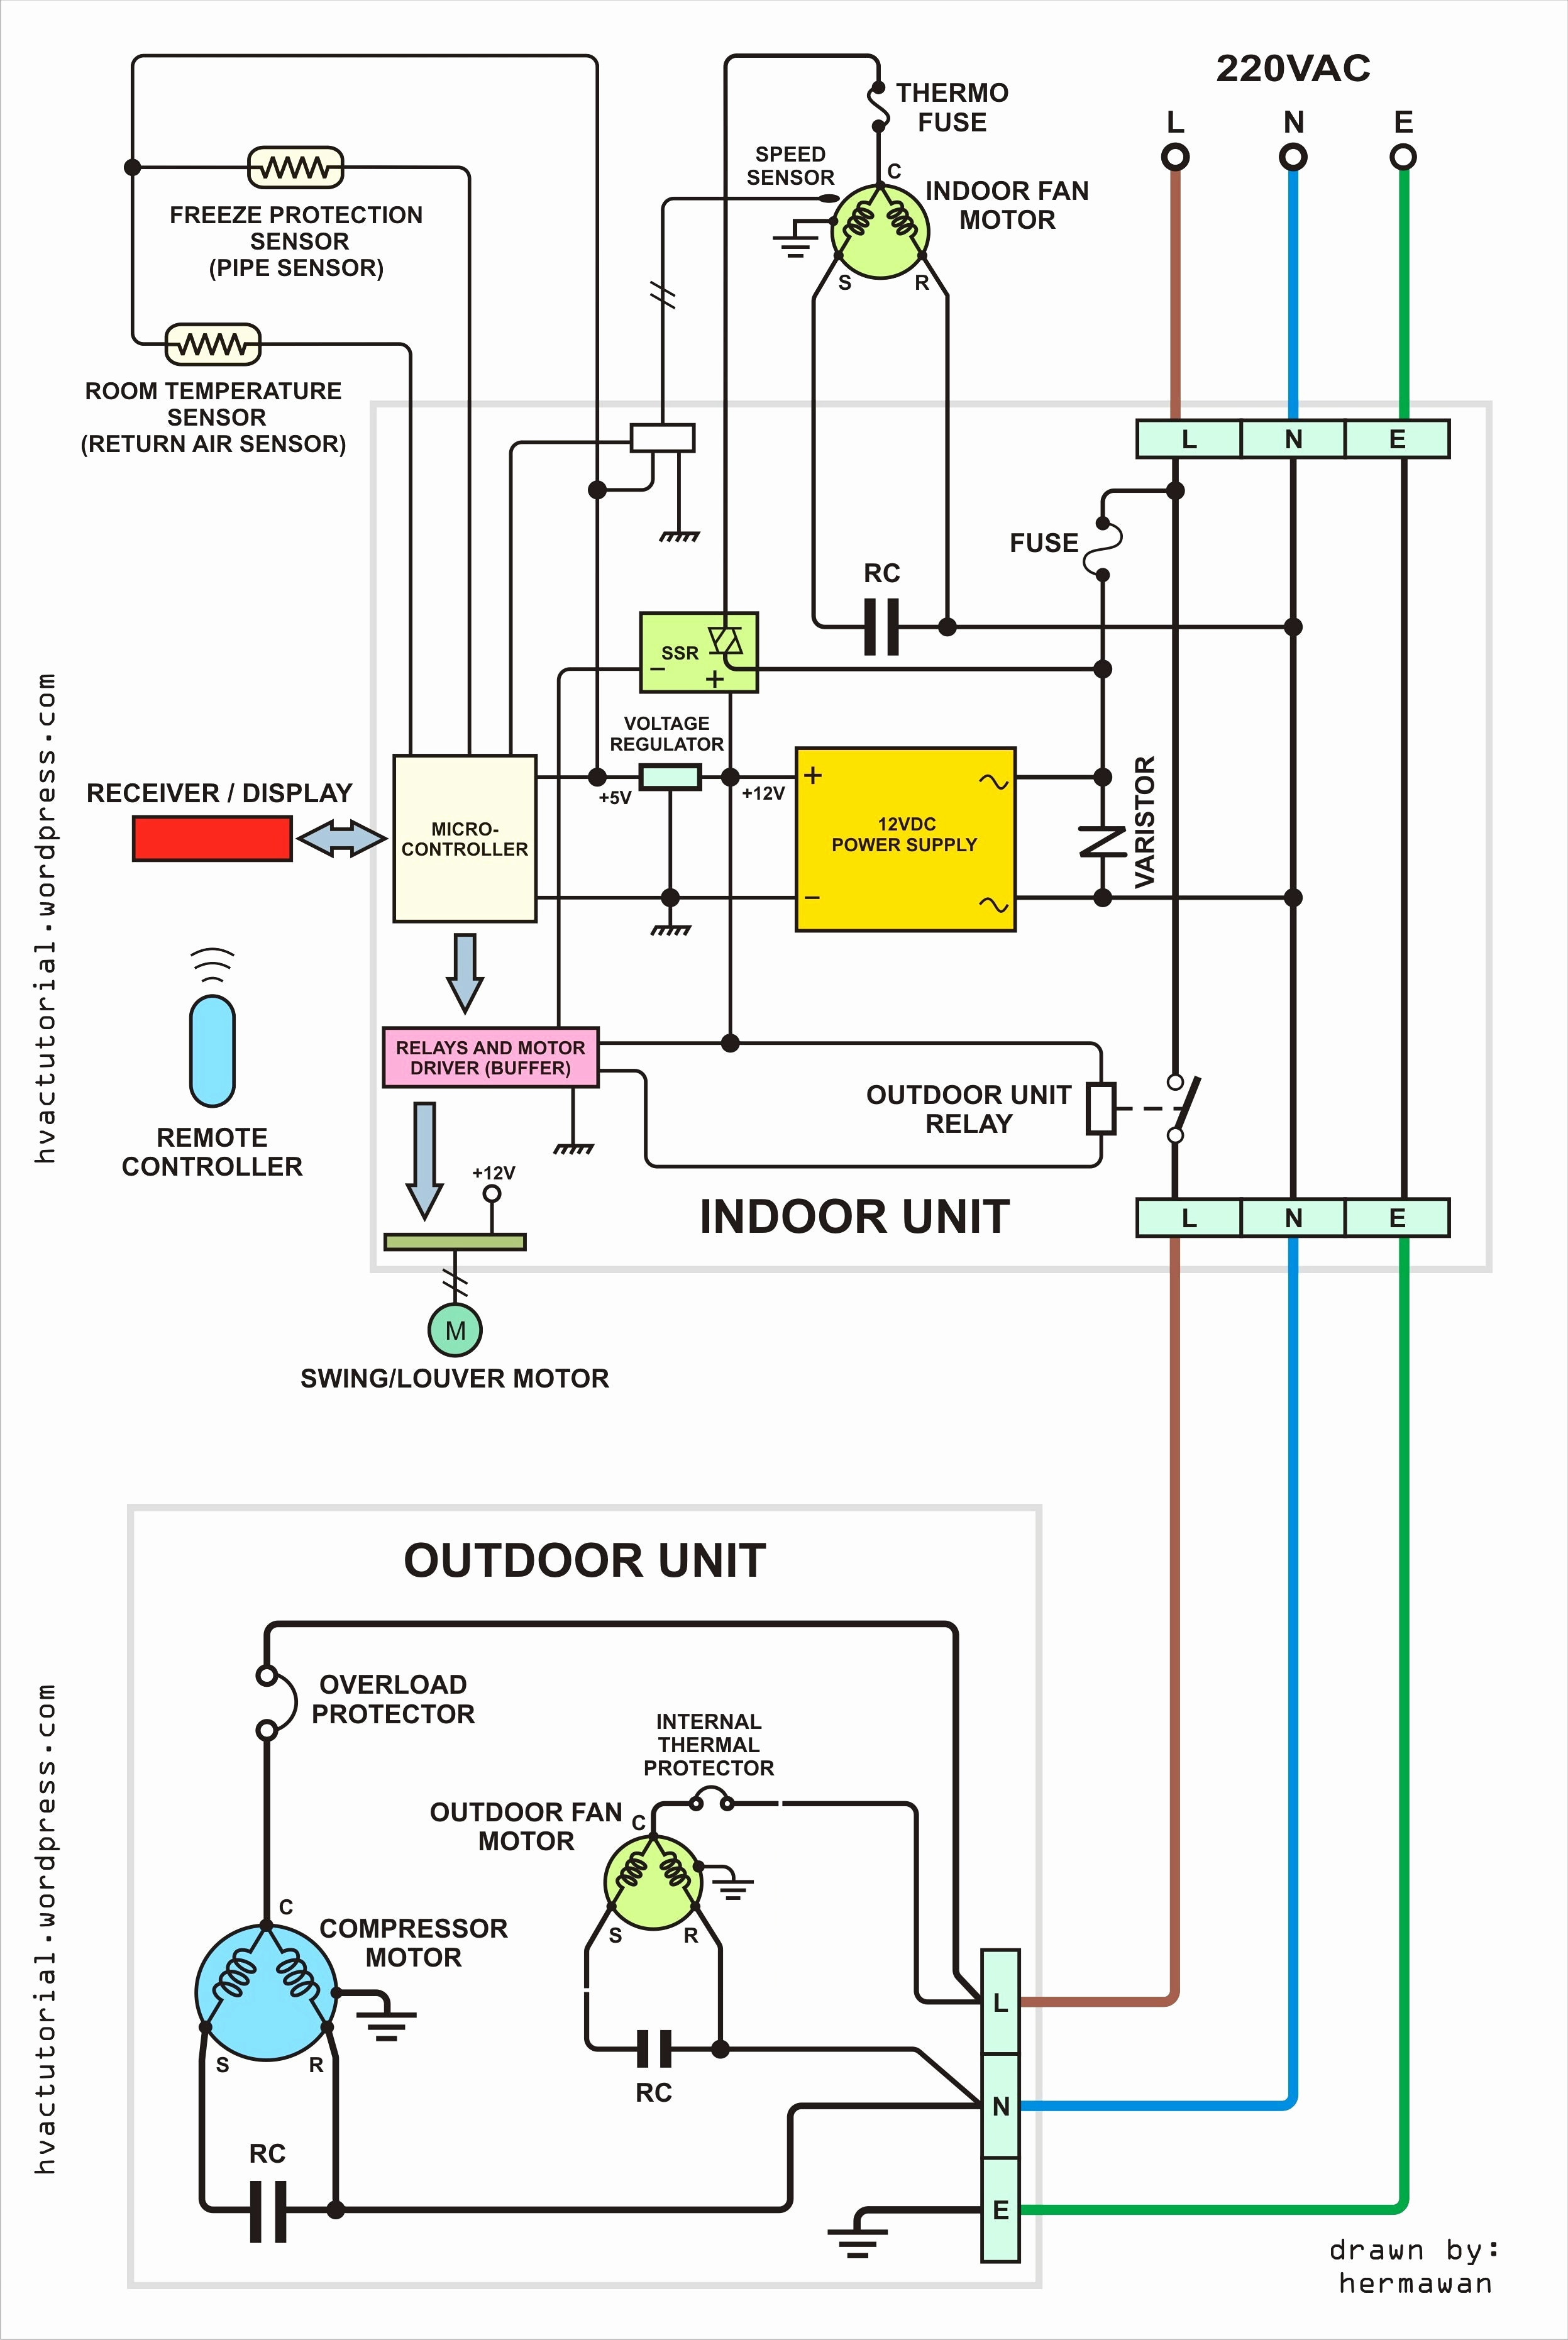 Central Air Conditioner Wiring Diagram Reference Carrier Ac Unit - Central Air Conditioner Wiring Diagram